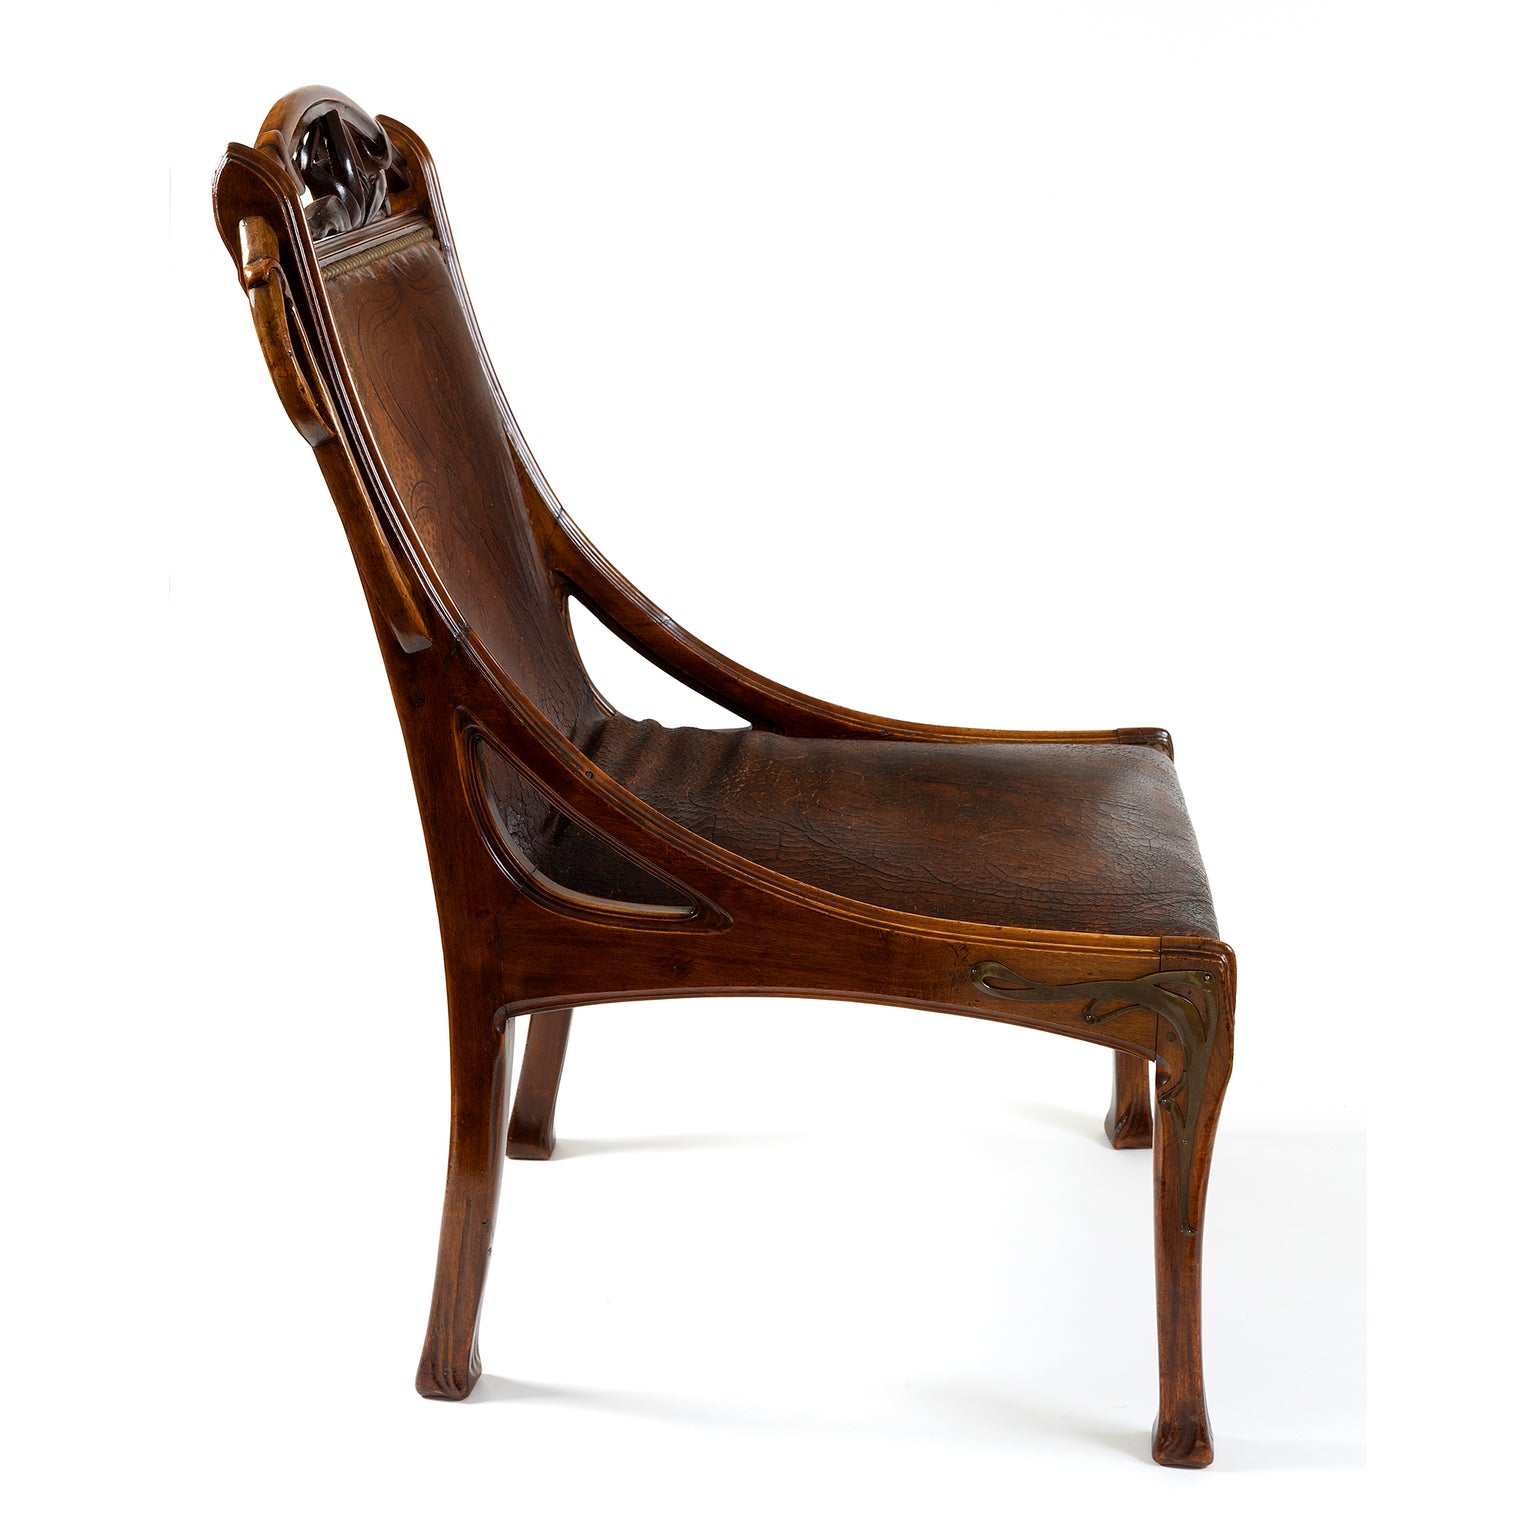 Macklowe Gallery | Antique Art Nouveau Furniture — MackloweGallery